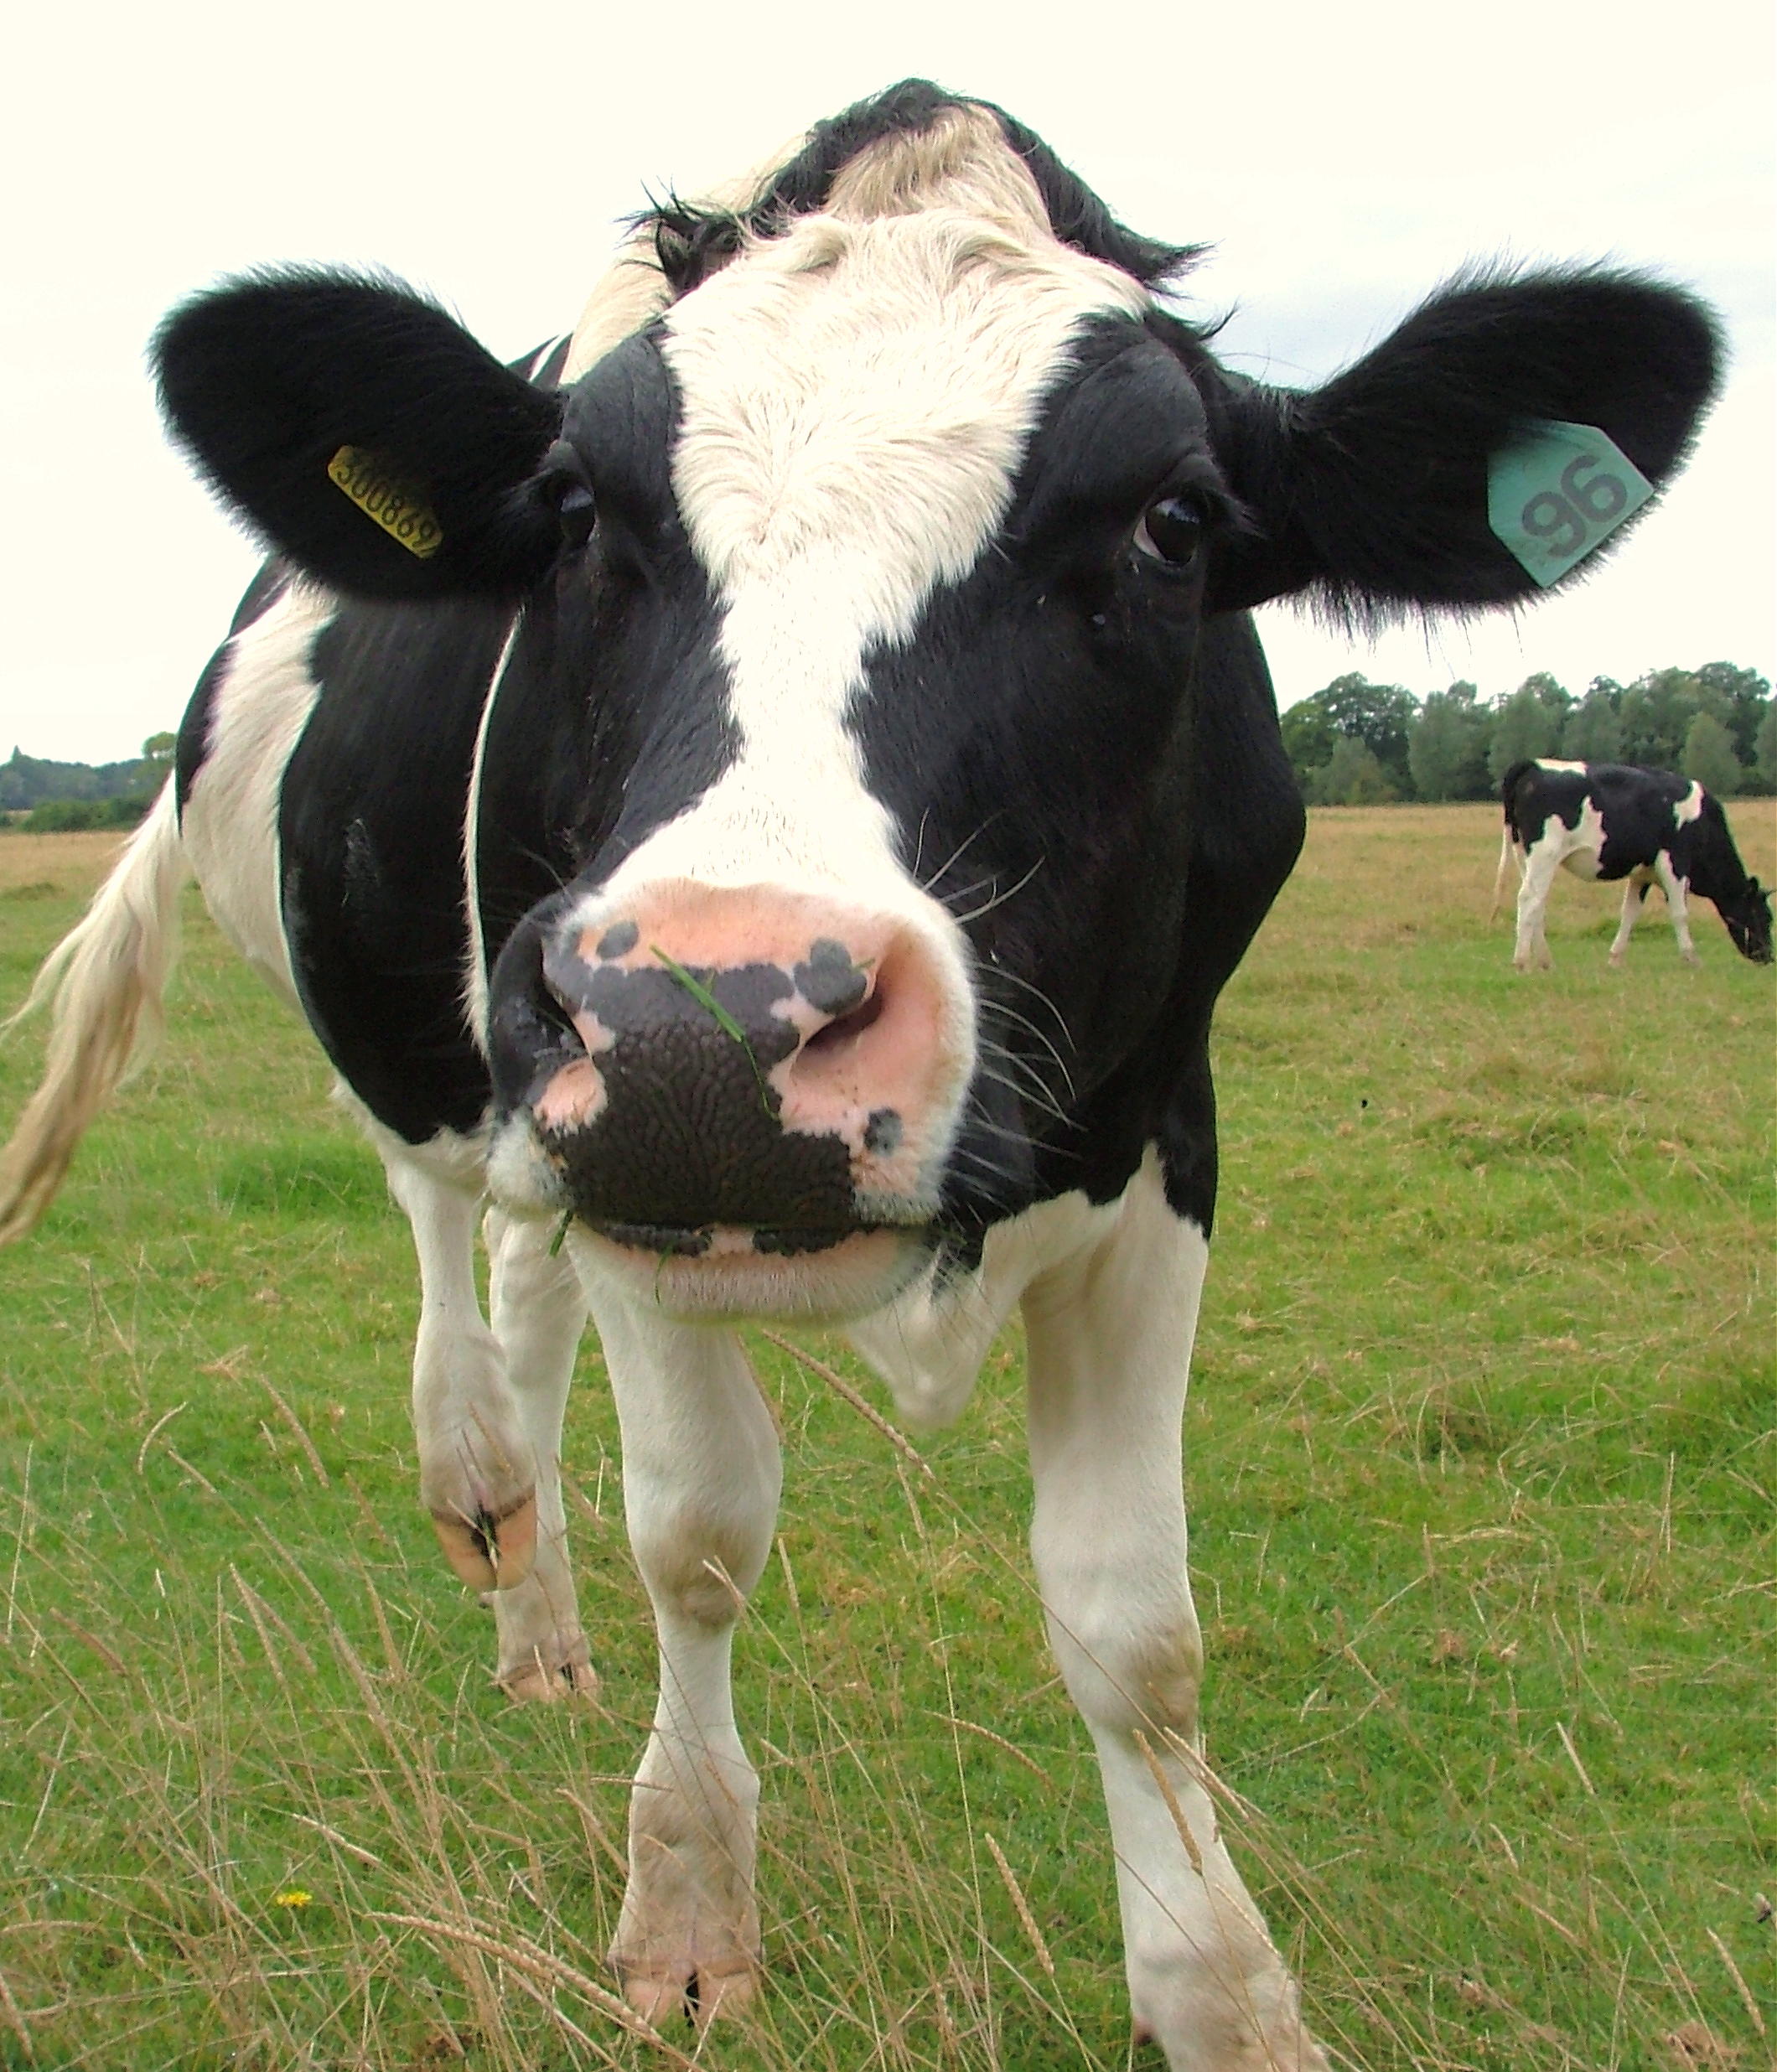 Cattle in Dedham, Essex, England, 2007